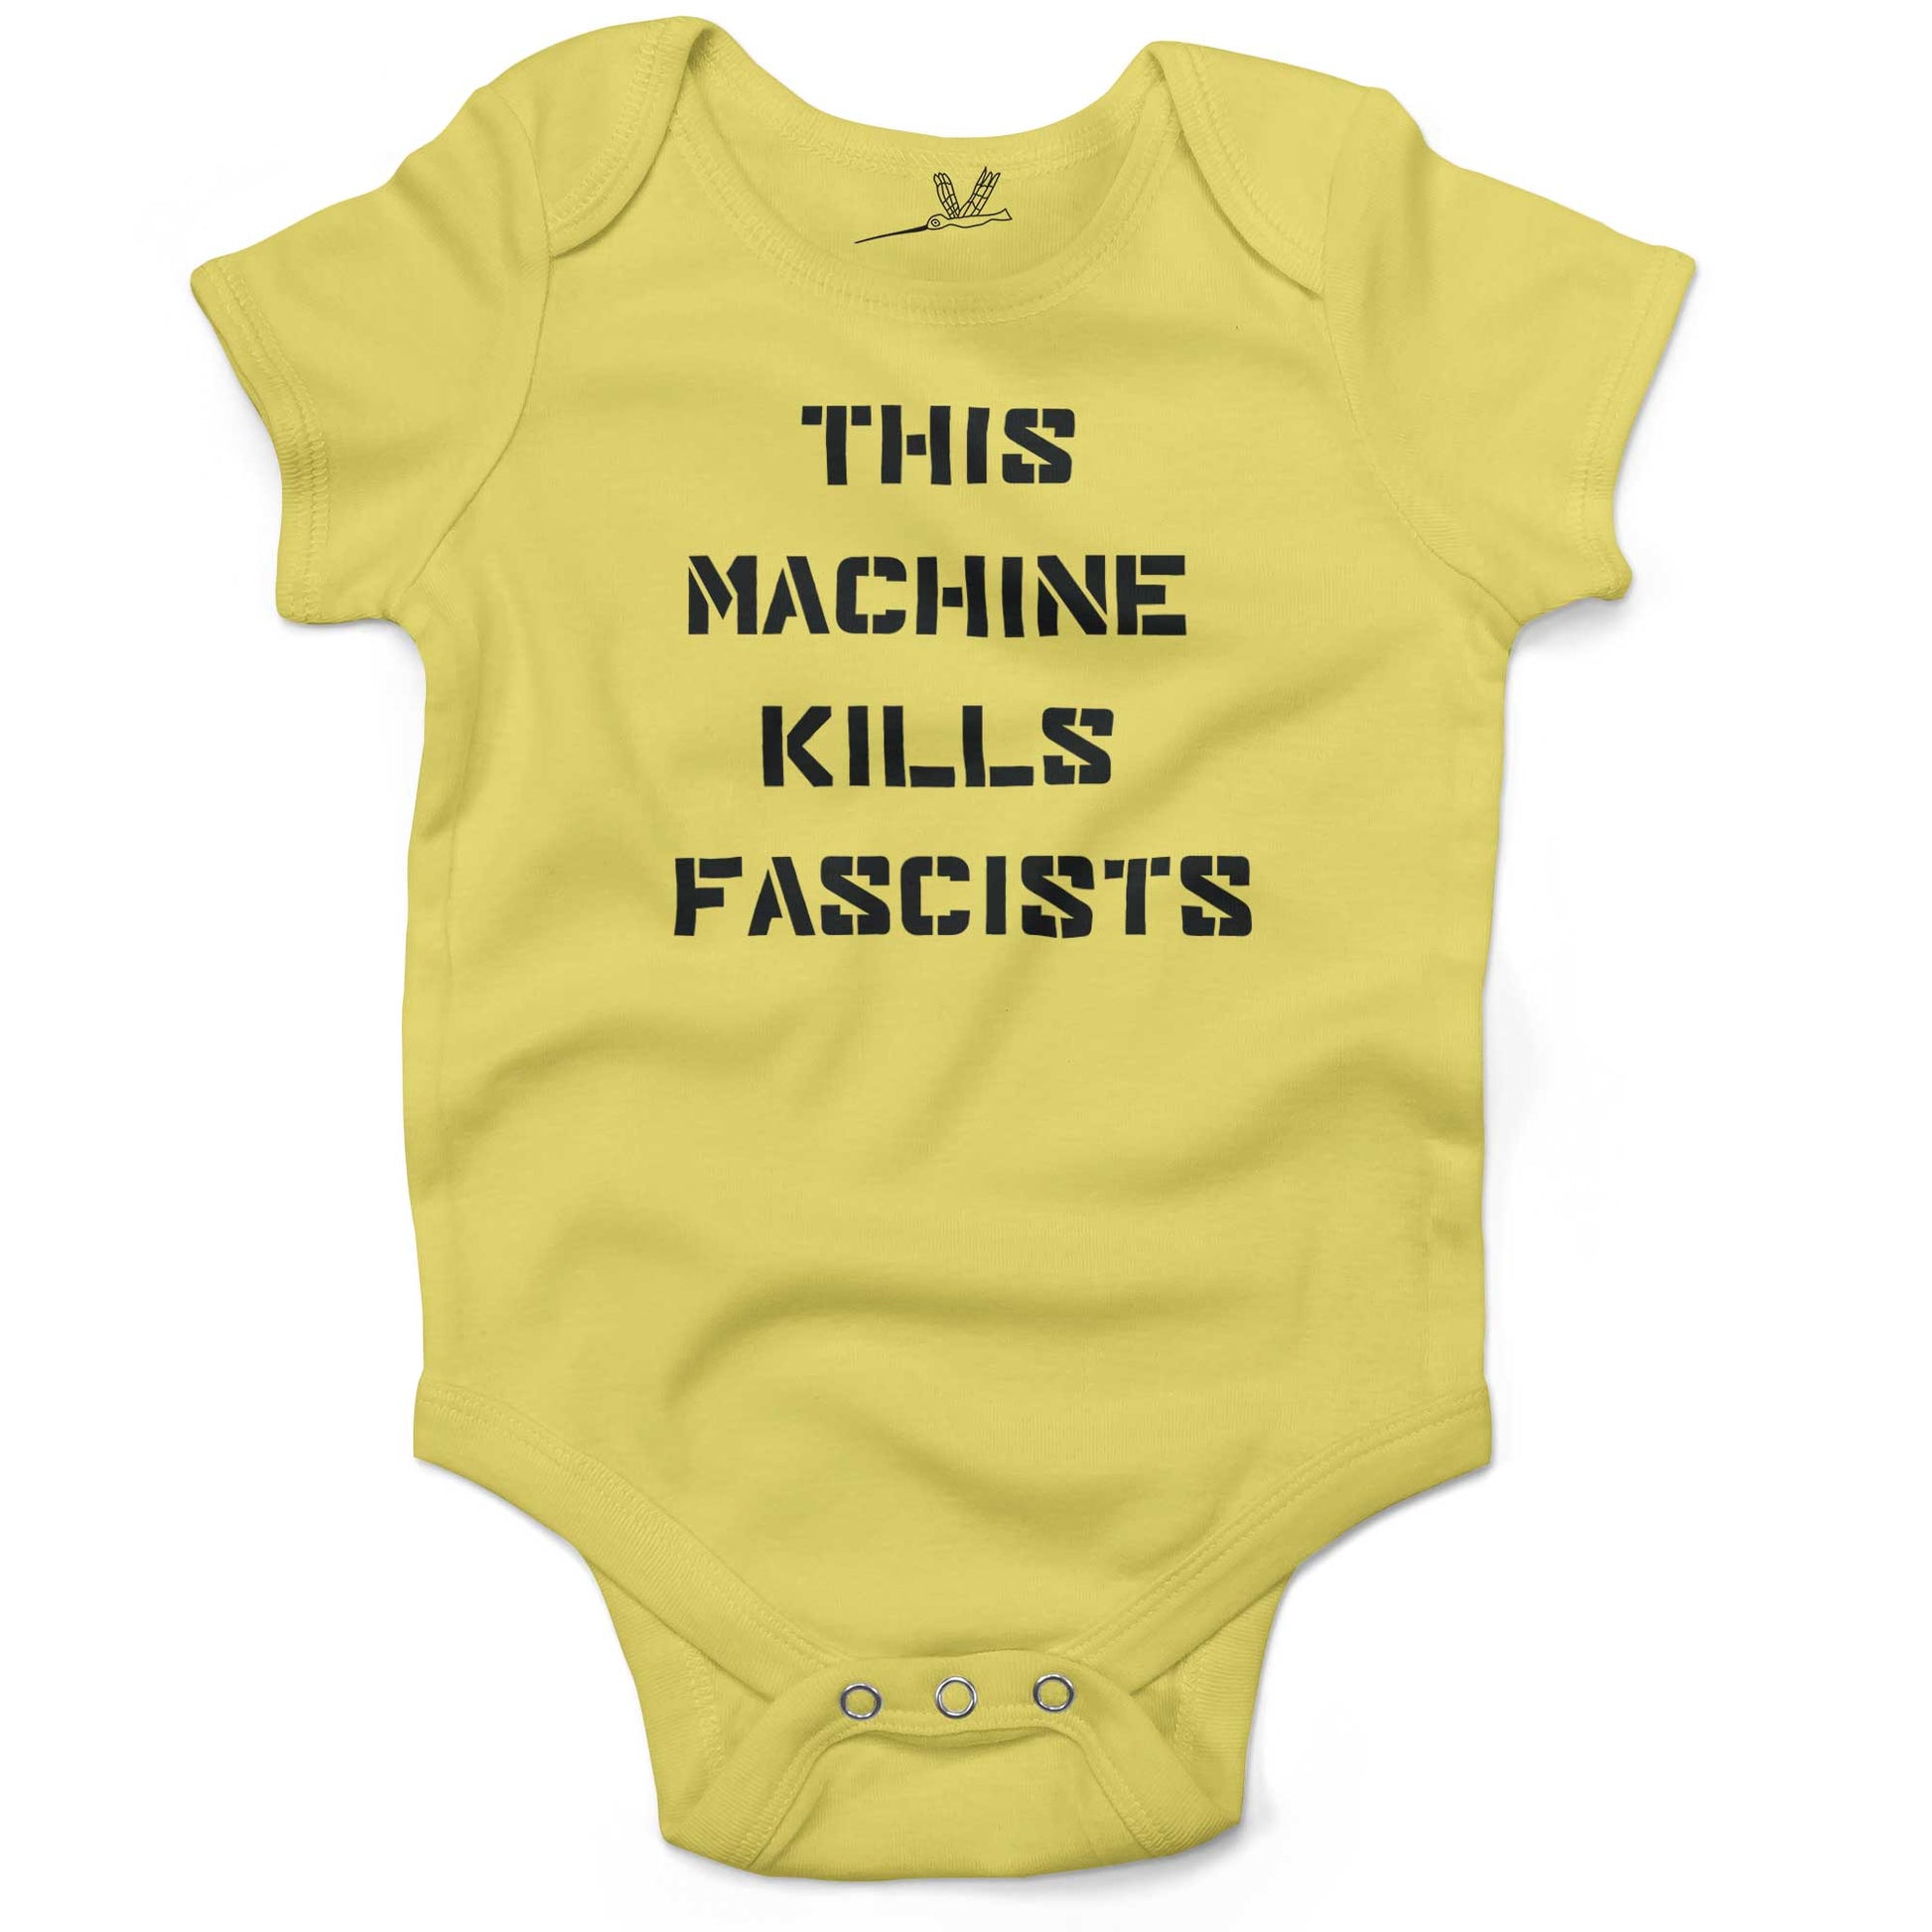 This Machine Kills Fascists Baby One Piece or Raglan Tee-Yellow-3-6 months